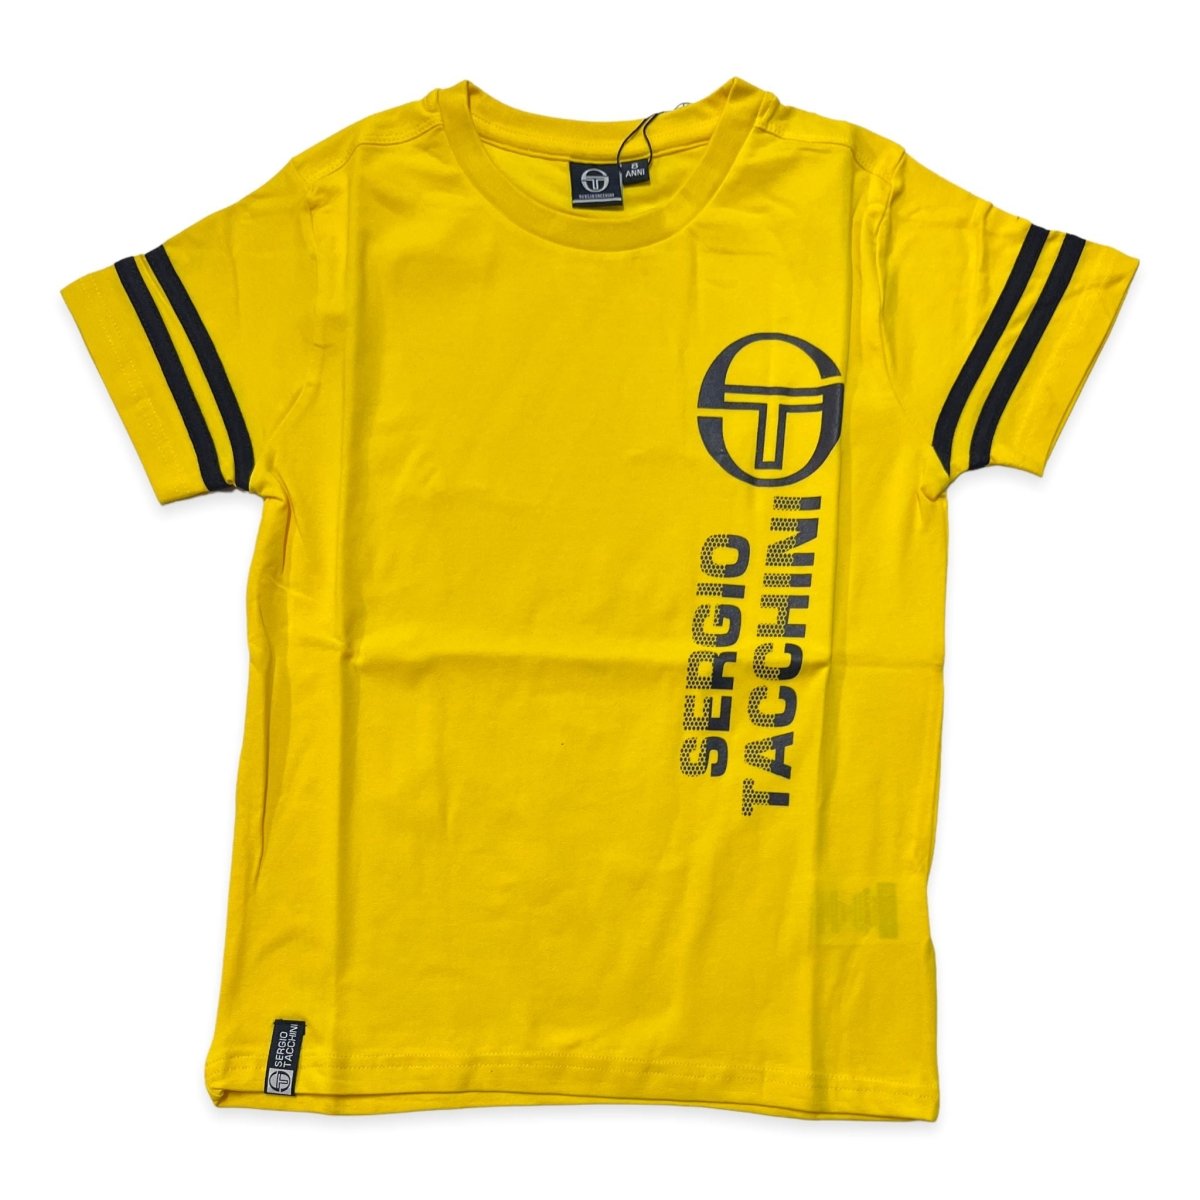 T-Shirt Sergio Tacchini - Mstore016 - T-shirt bimbo - Sergio Tacchini